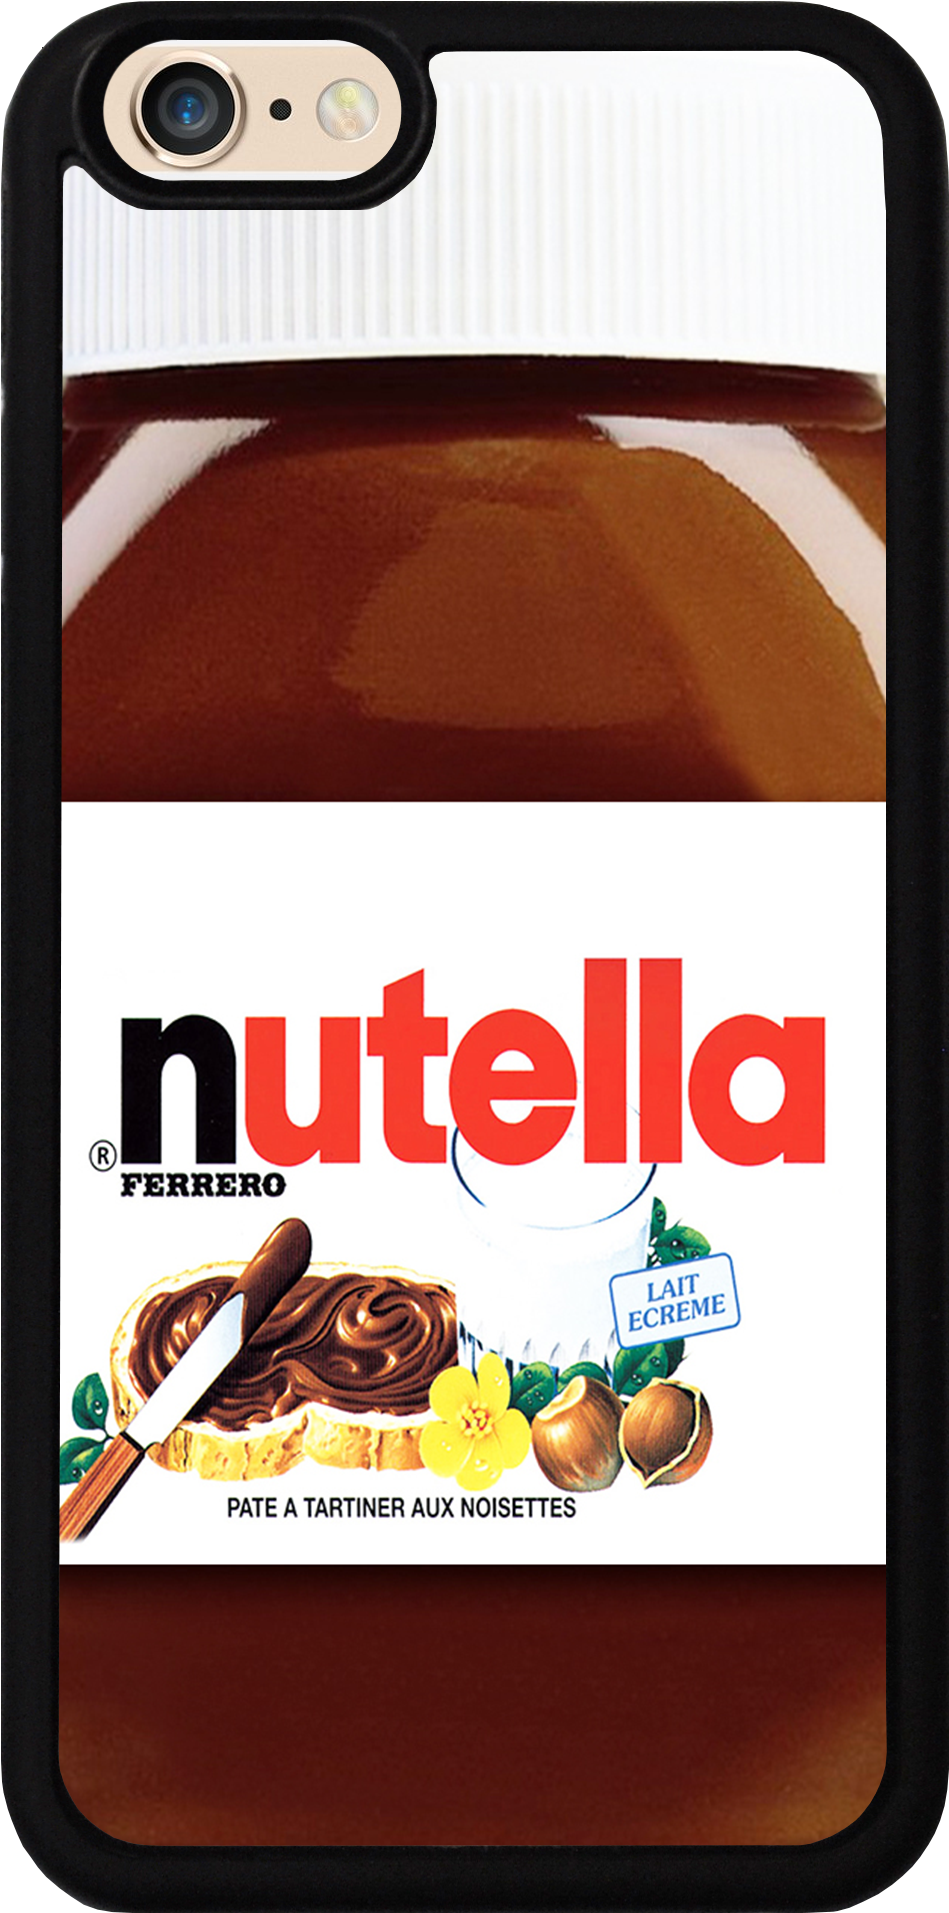 Nutella Case - Special Price Nutella Ferrero Hazelnut Spread With (1141x2028), Png Download